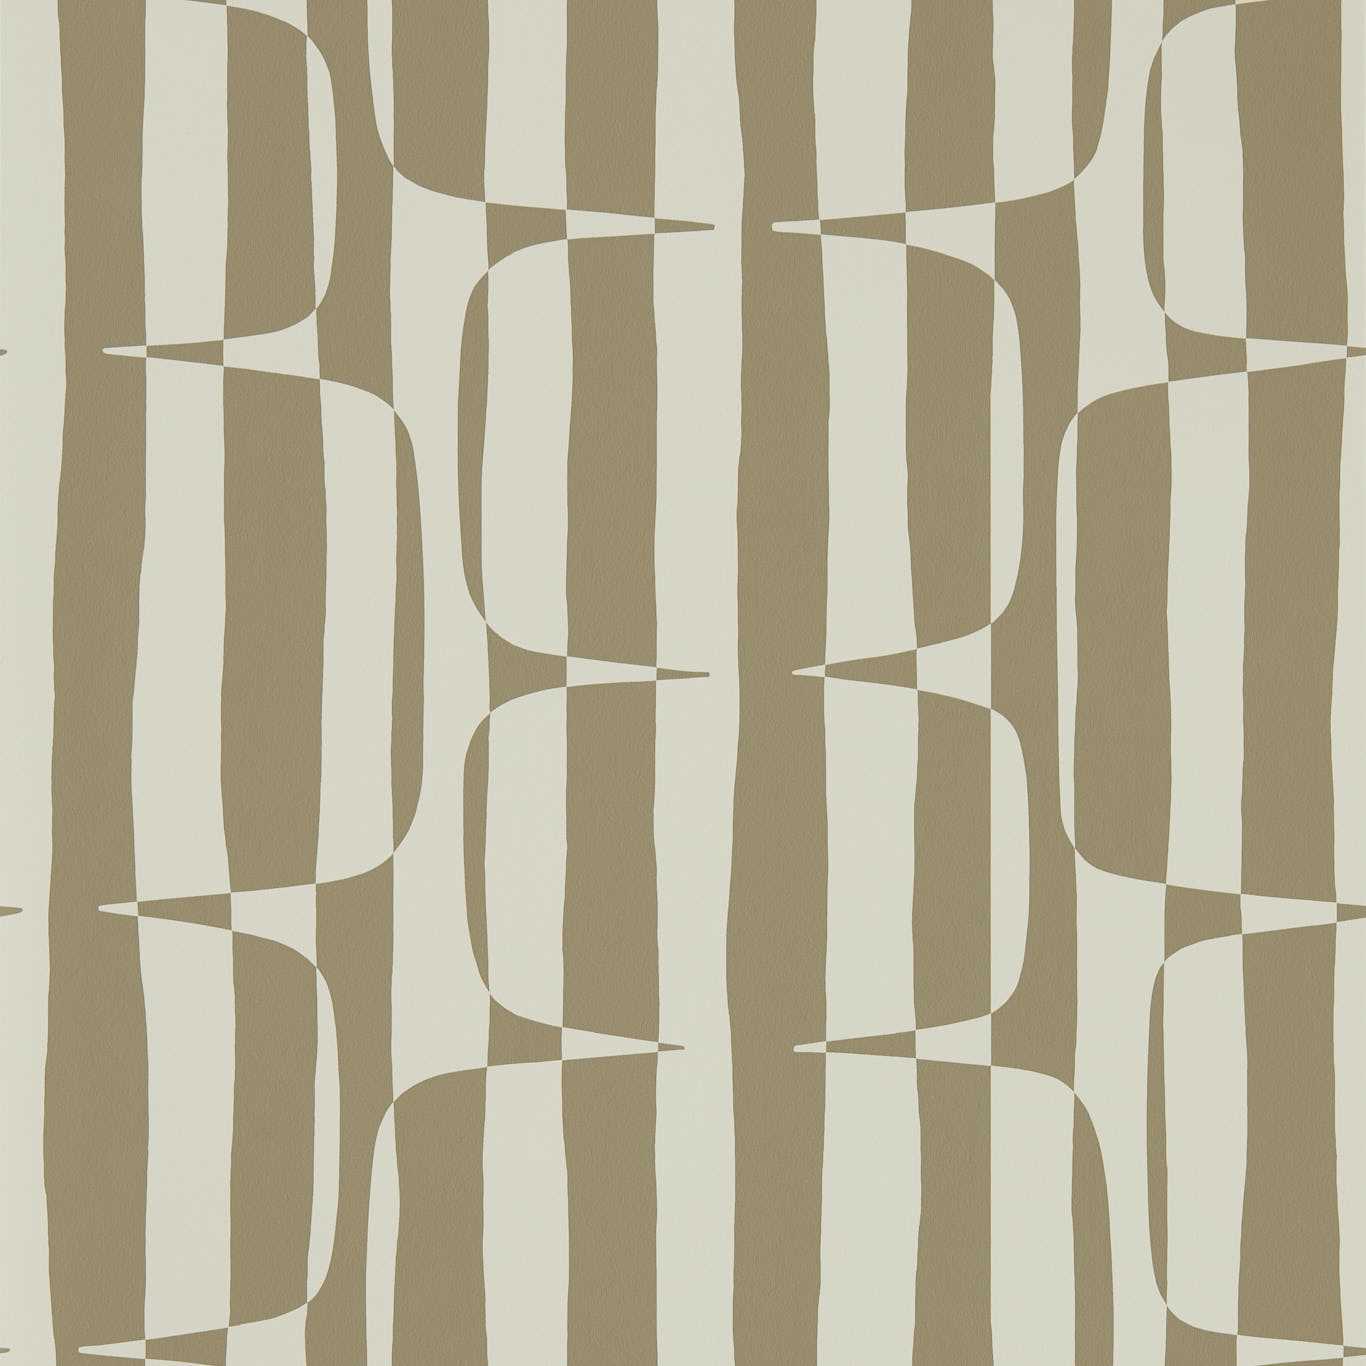 Lohko Stripe Cobbles Wallpaper NBIW113039 by Scion